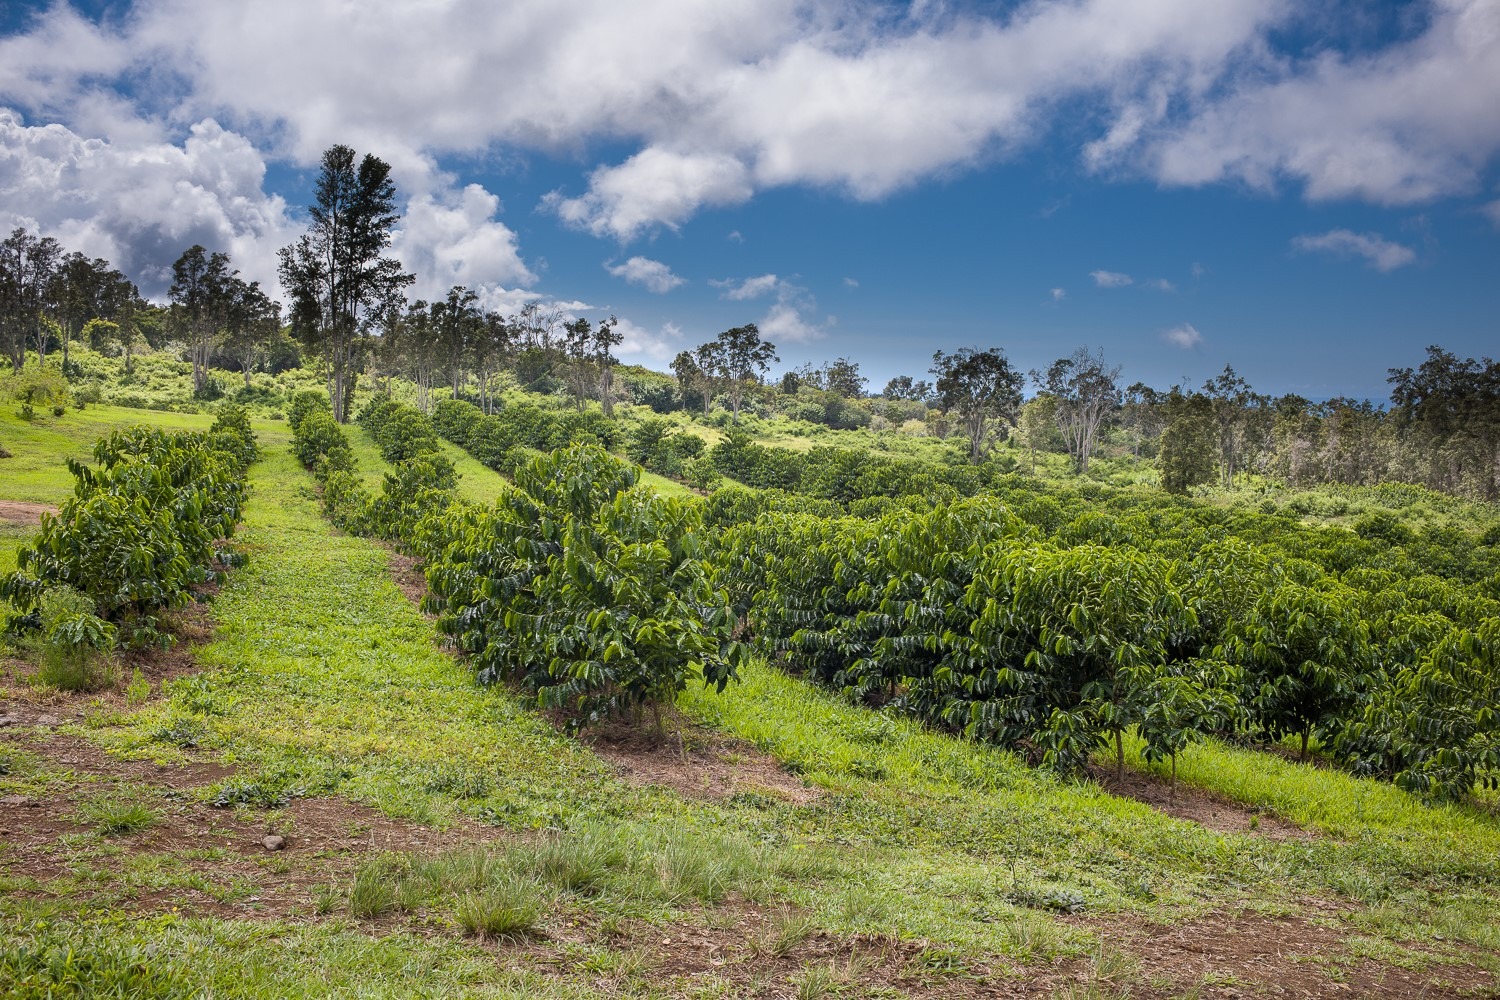 Kopiko Farms 100% Kona Coffee